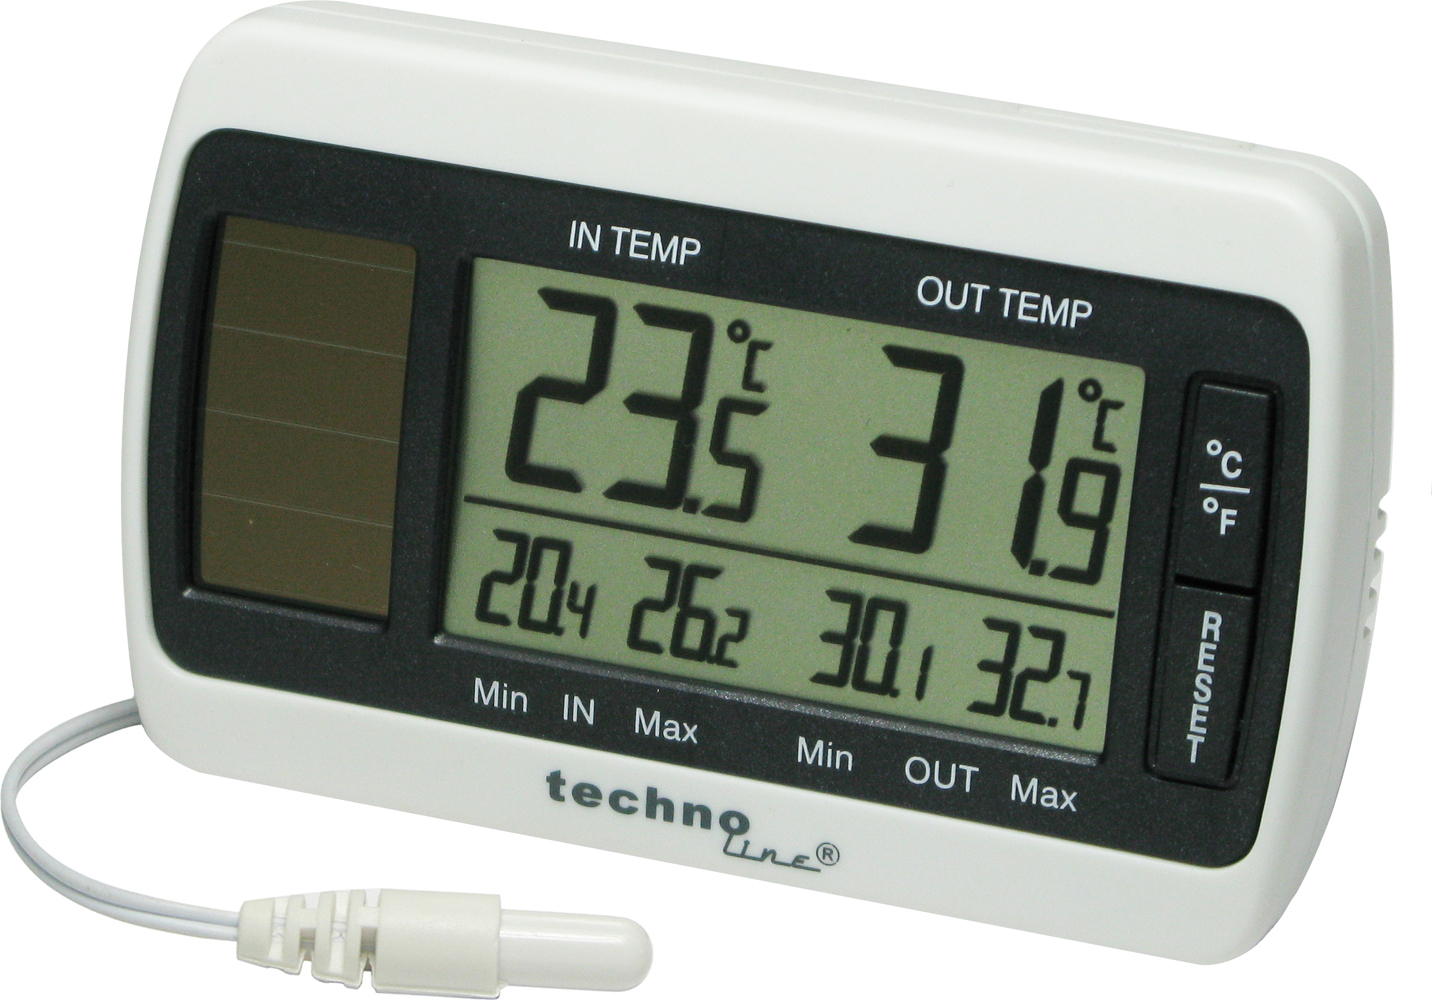 Technoline Temperaturstation WS 7008